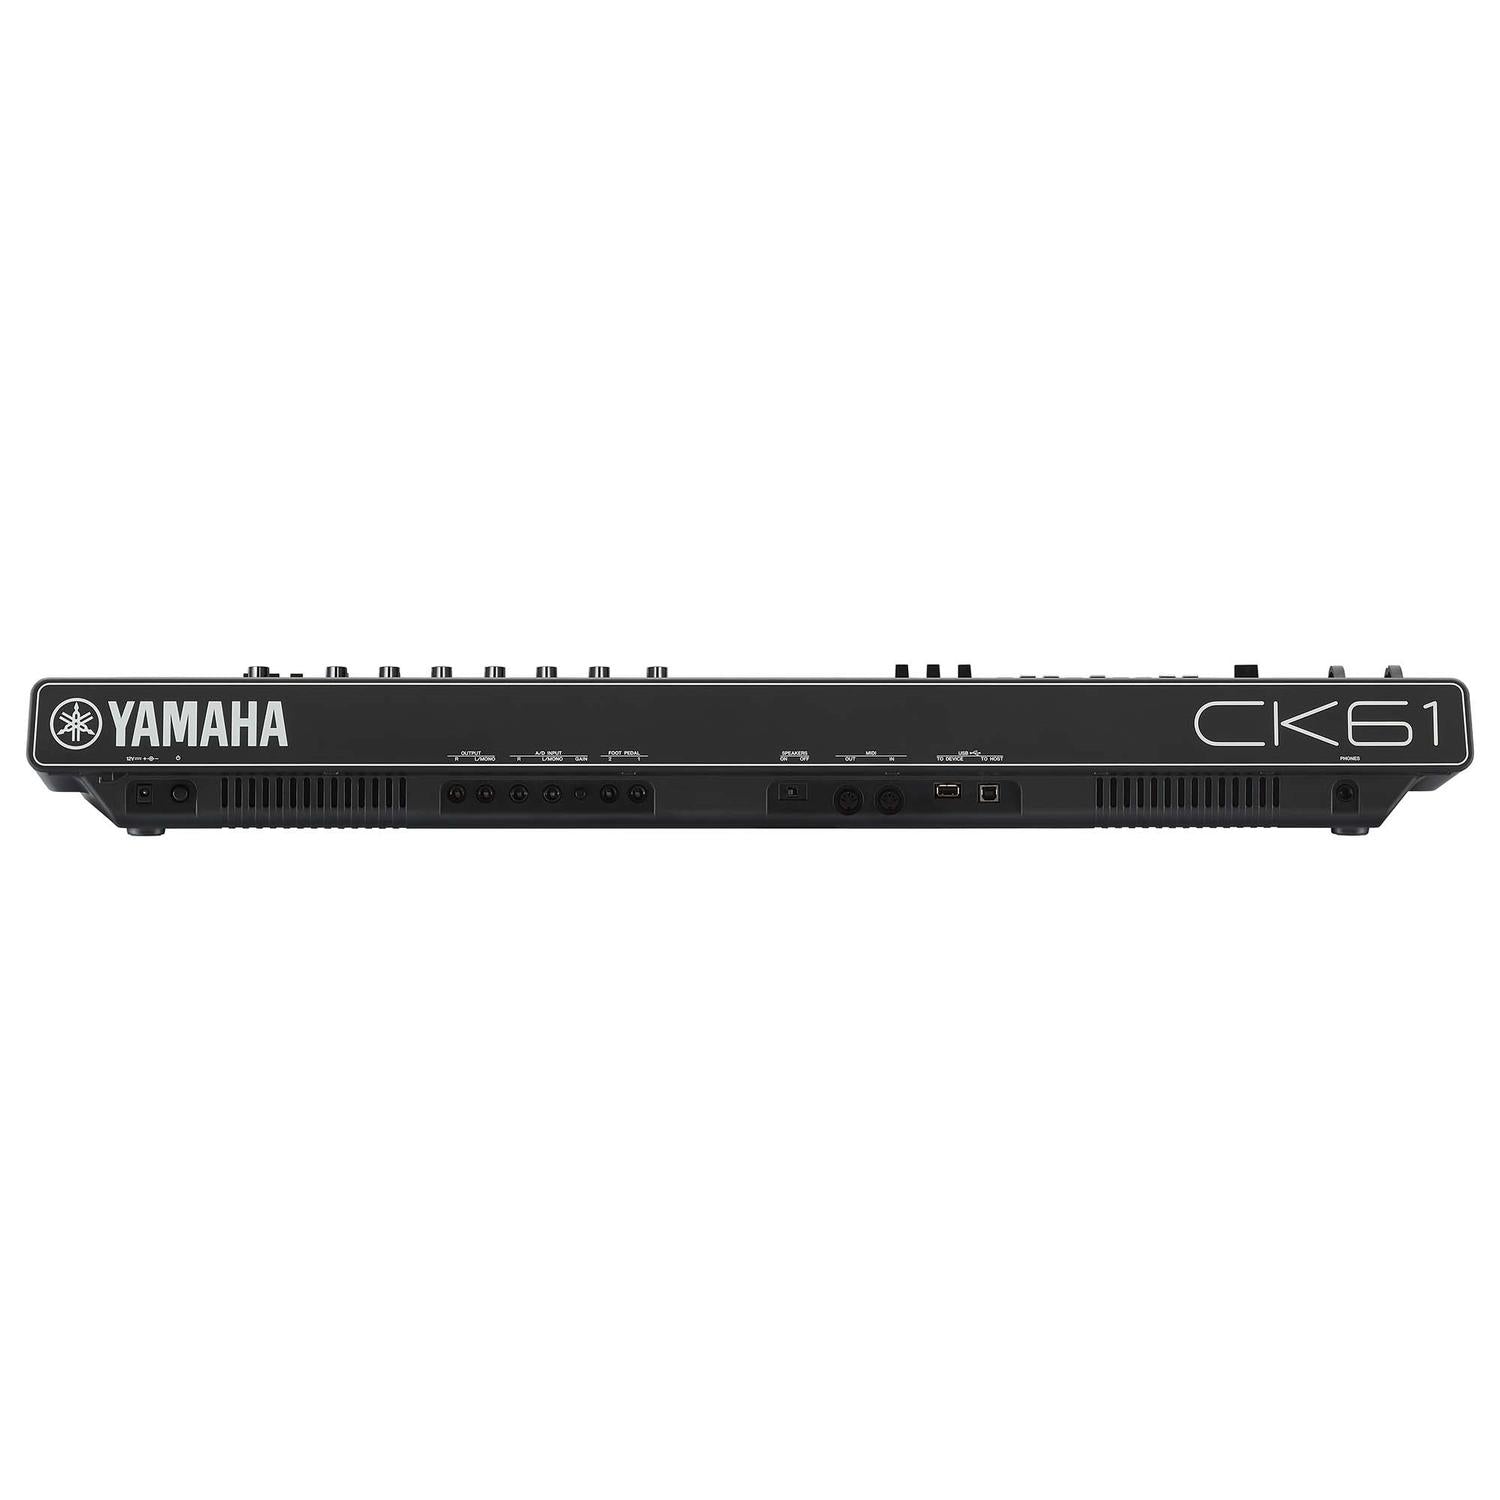 Yamaha CK-61 Sintetizador Profesional de 61 teclas